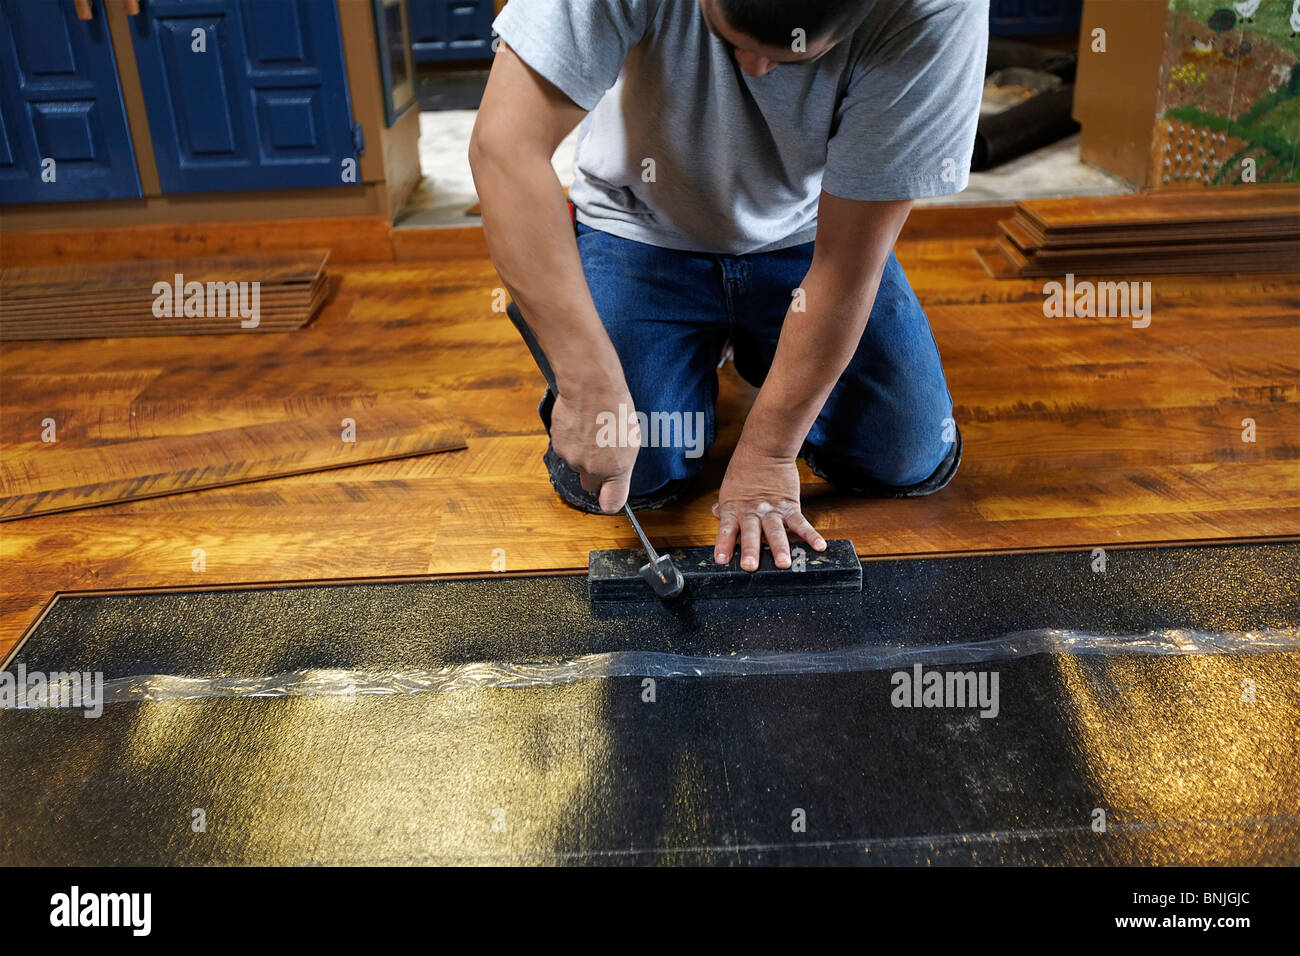 laying new laminate floor flooring worker workers man men indoor indoors houses apartment Stock Photo